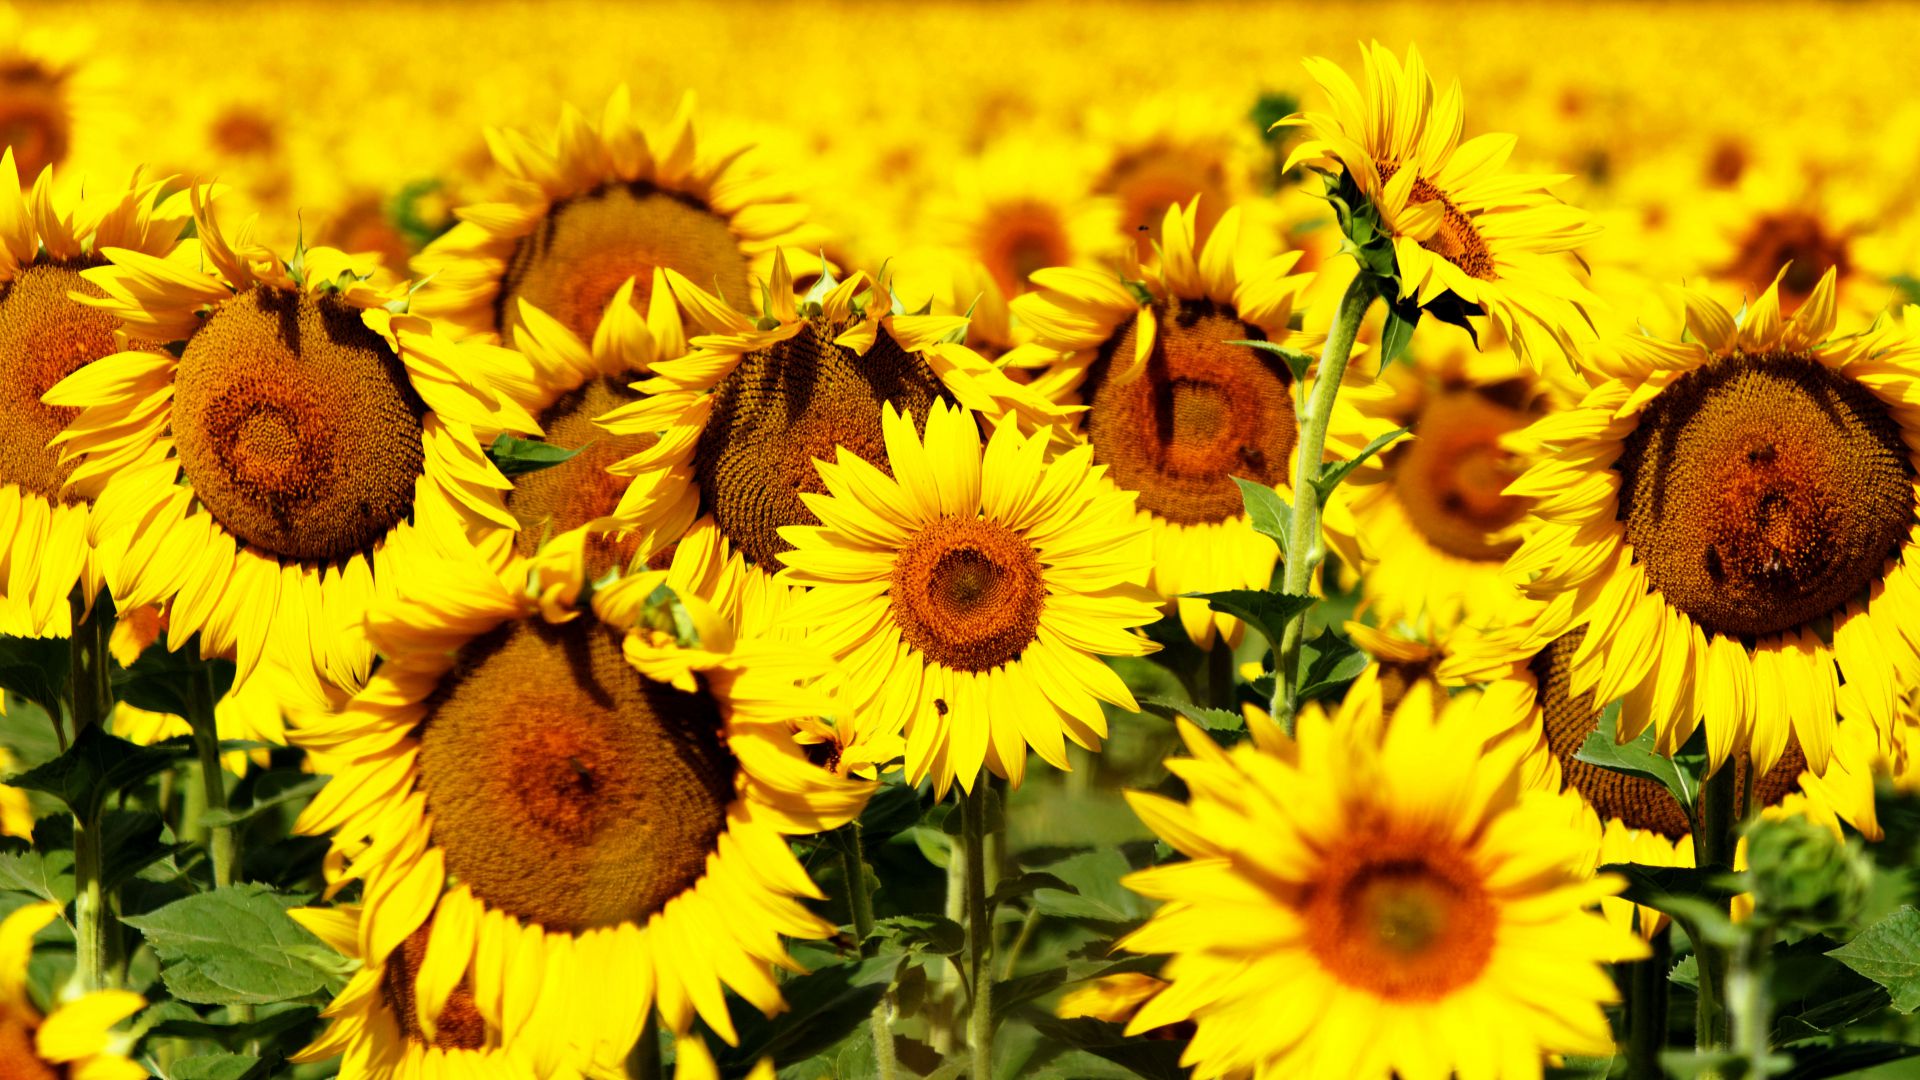 Подсолнухи, 5k, 4k, 8k, цветы, поле, желтый, Sunflowers, 5k, 4k wallpaper, 8k, flowers, field, yellow (horizontal)